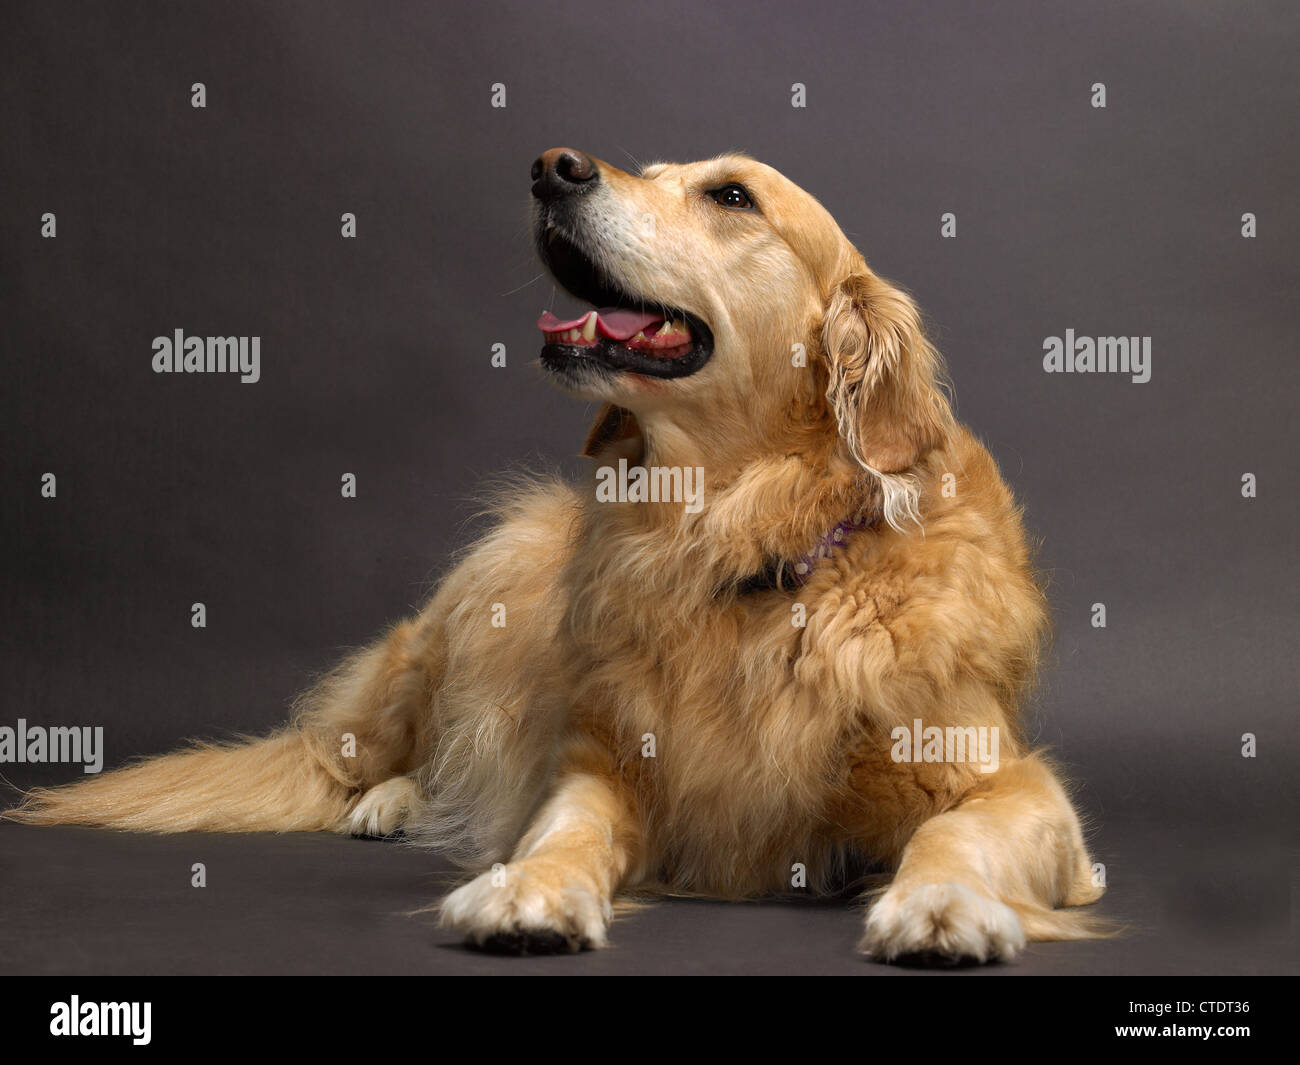 A golden retriever dog lying down Stock Photo